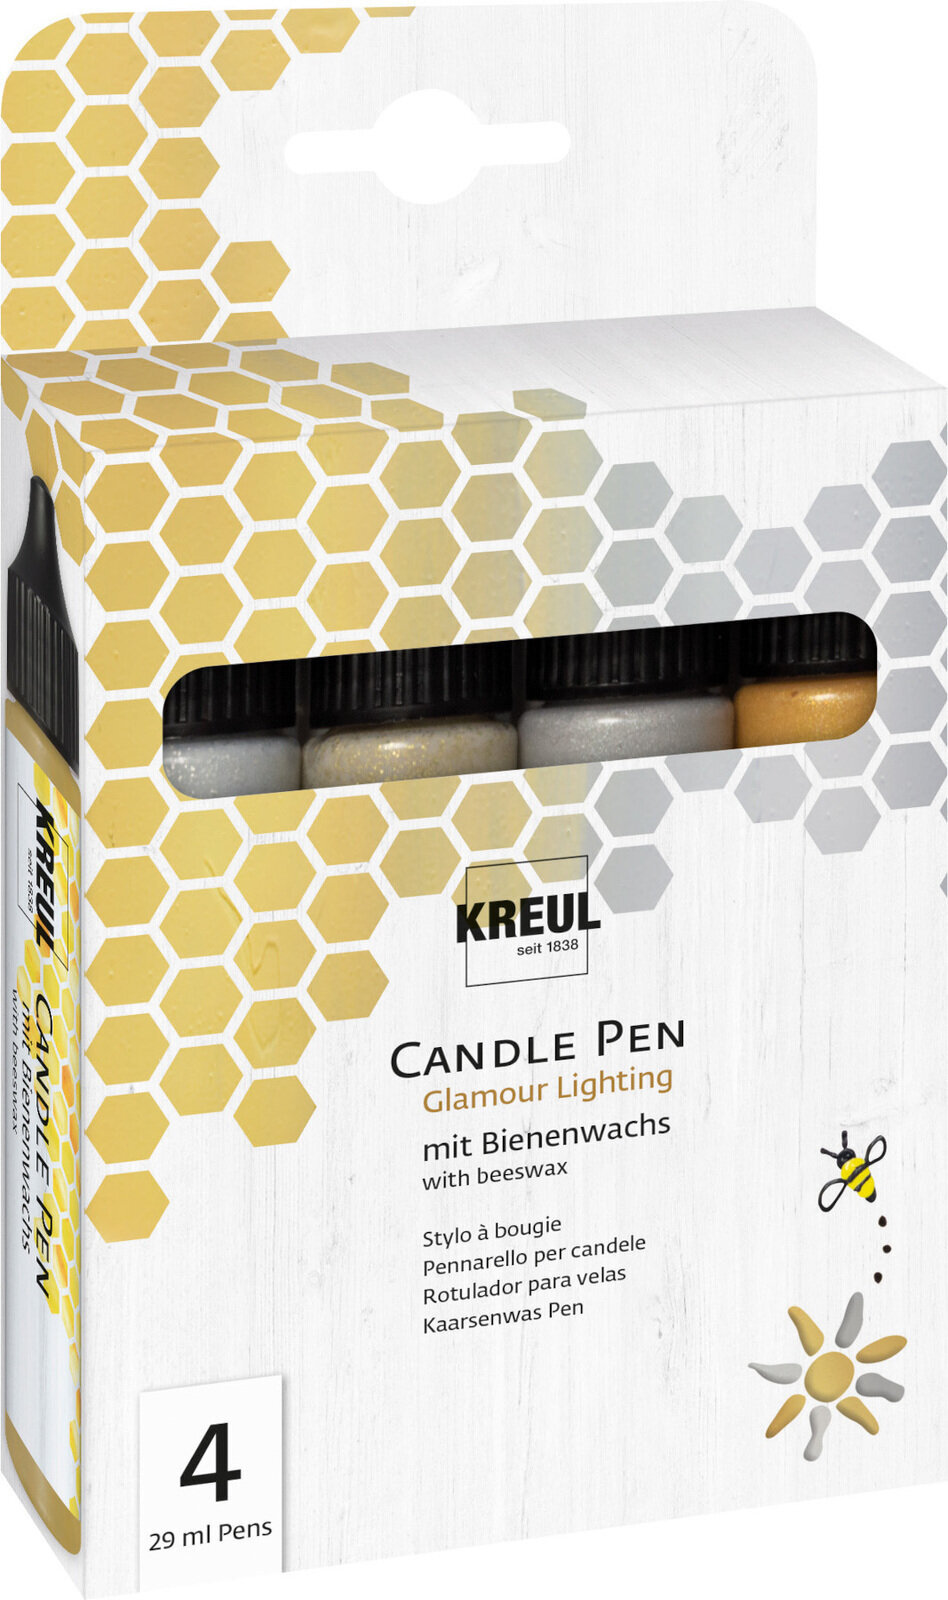 Viltstift Kreul Candle Pen Glamour Lighting Set